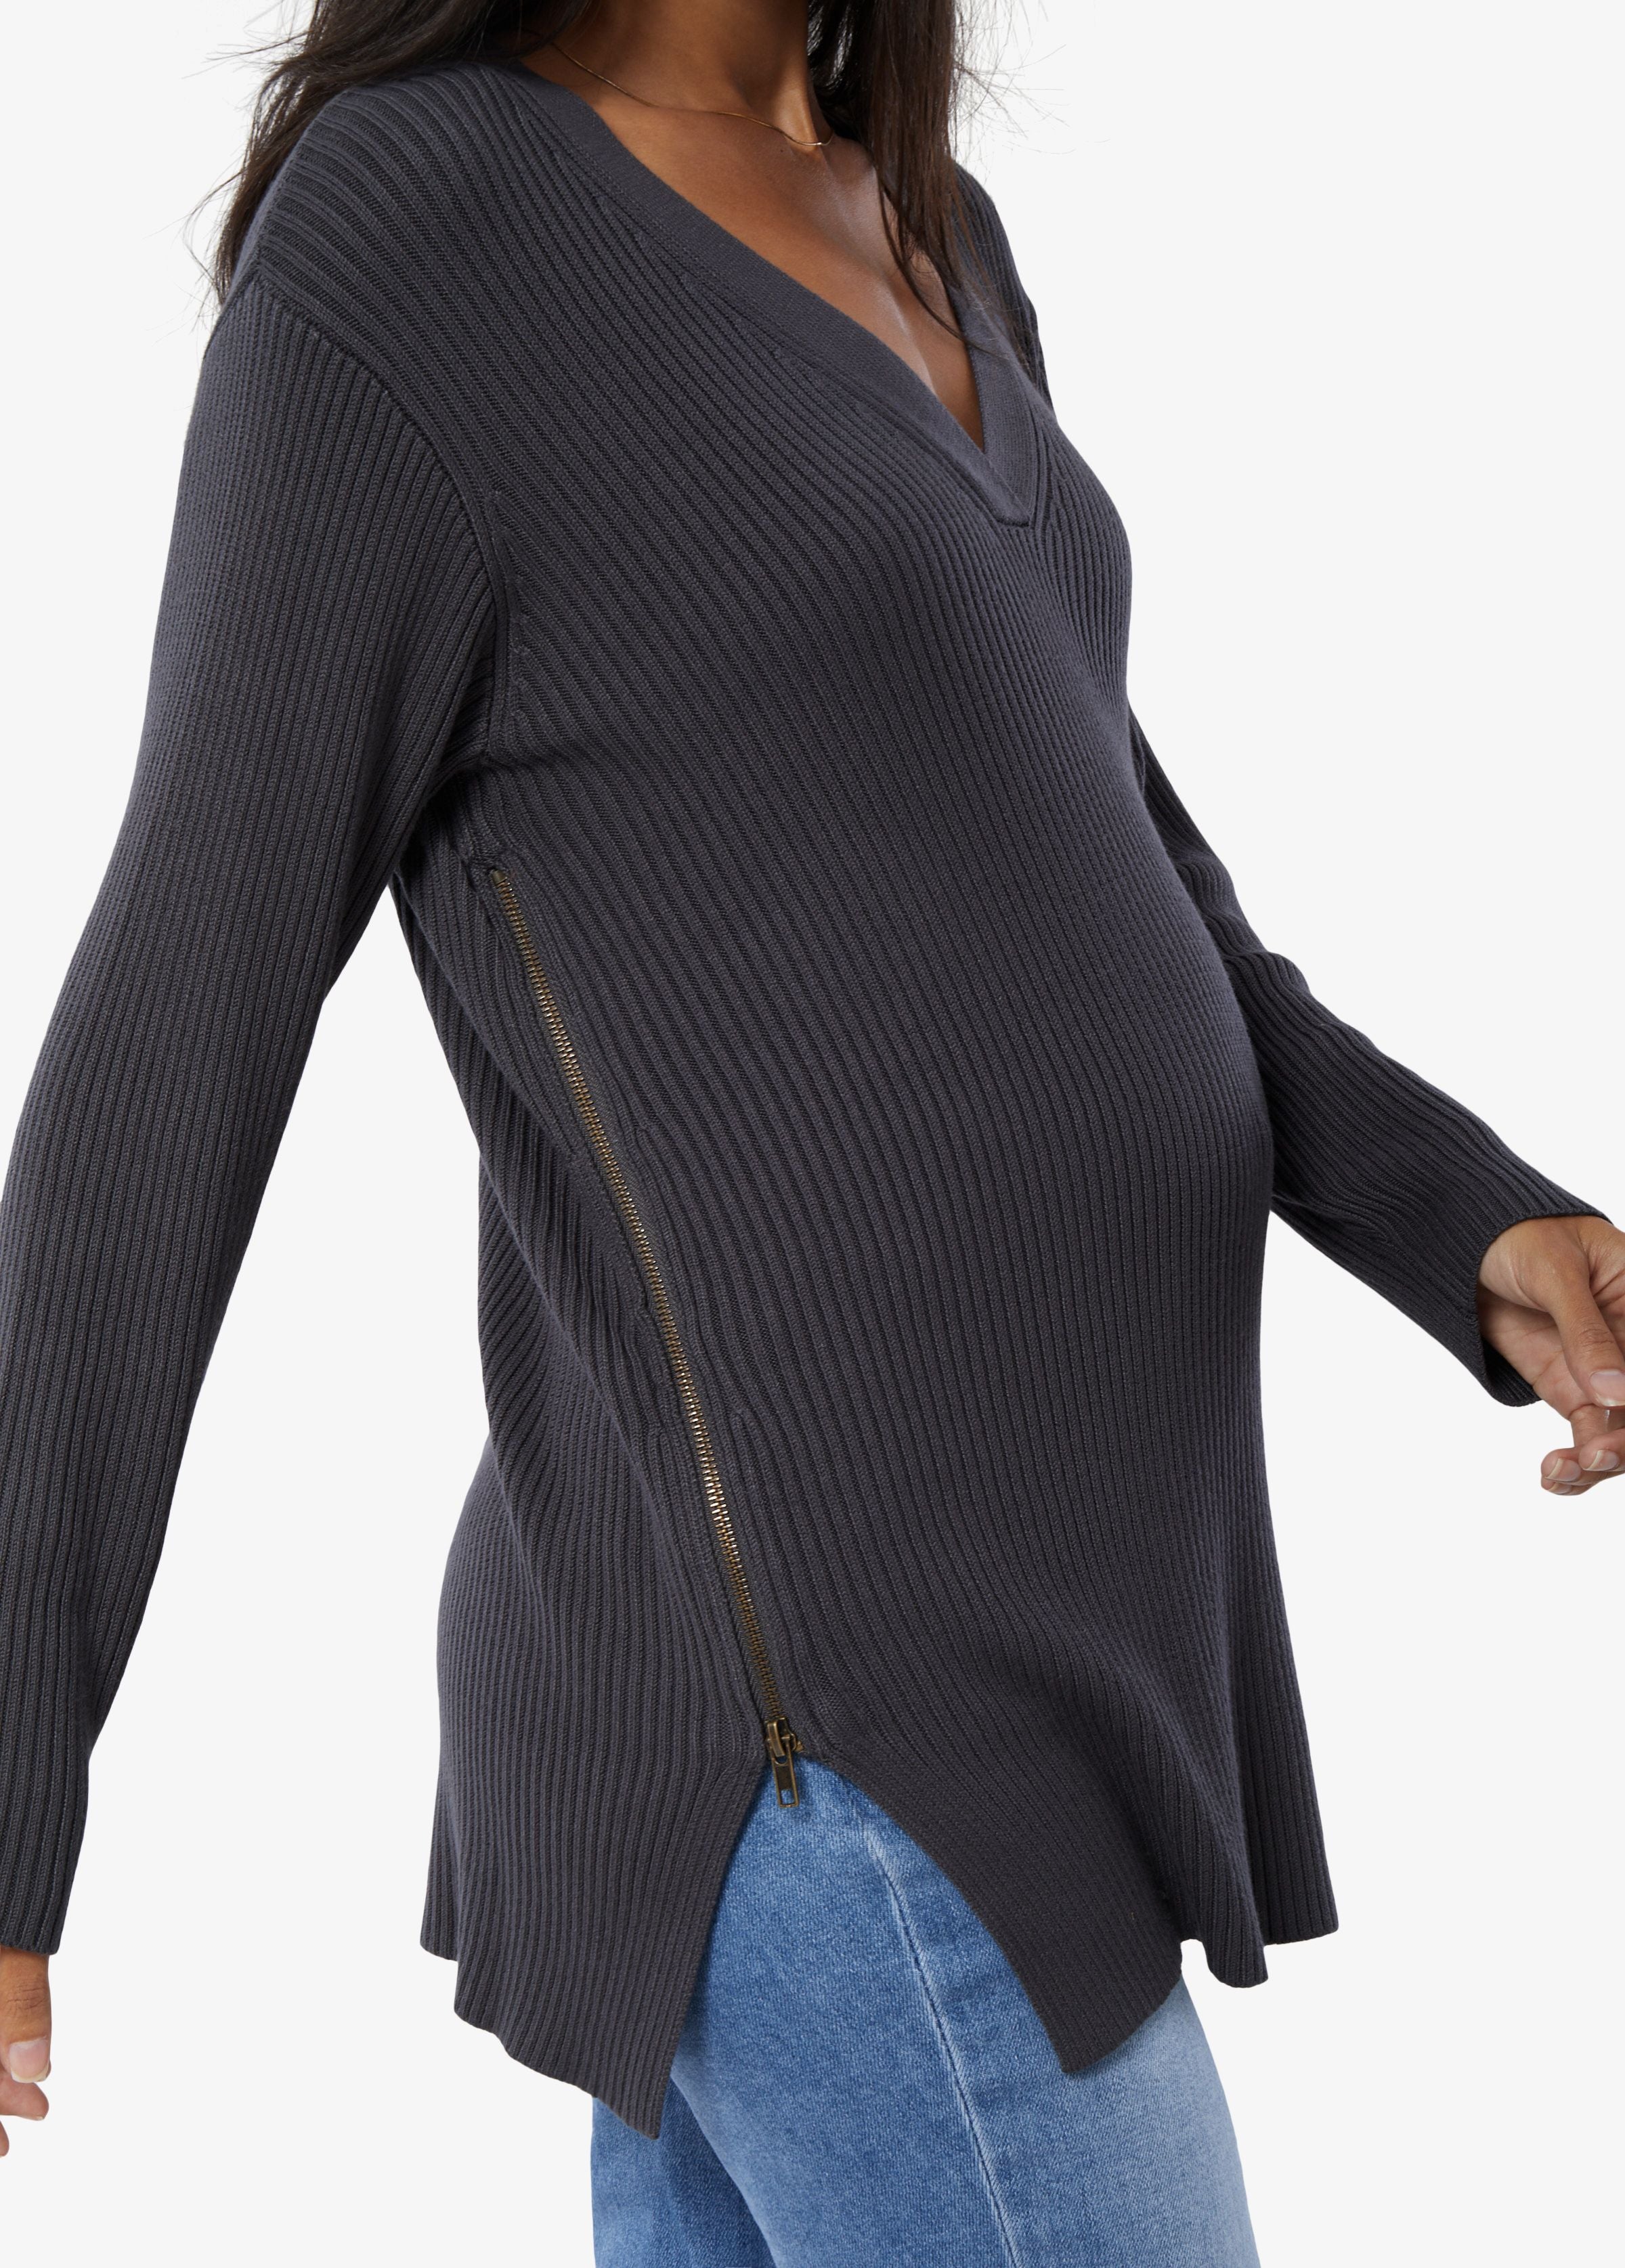 SALE!  Side Zip Sweater in Asphalt by Ingrid & Isabel